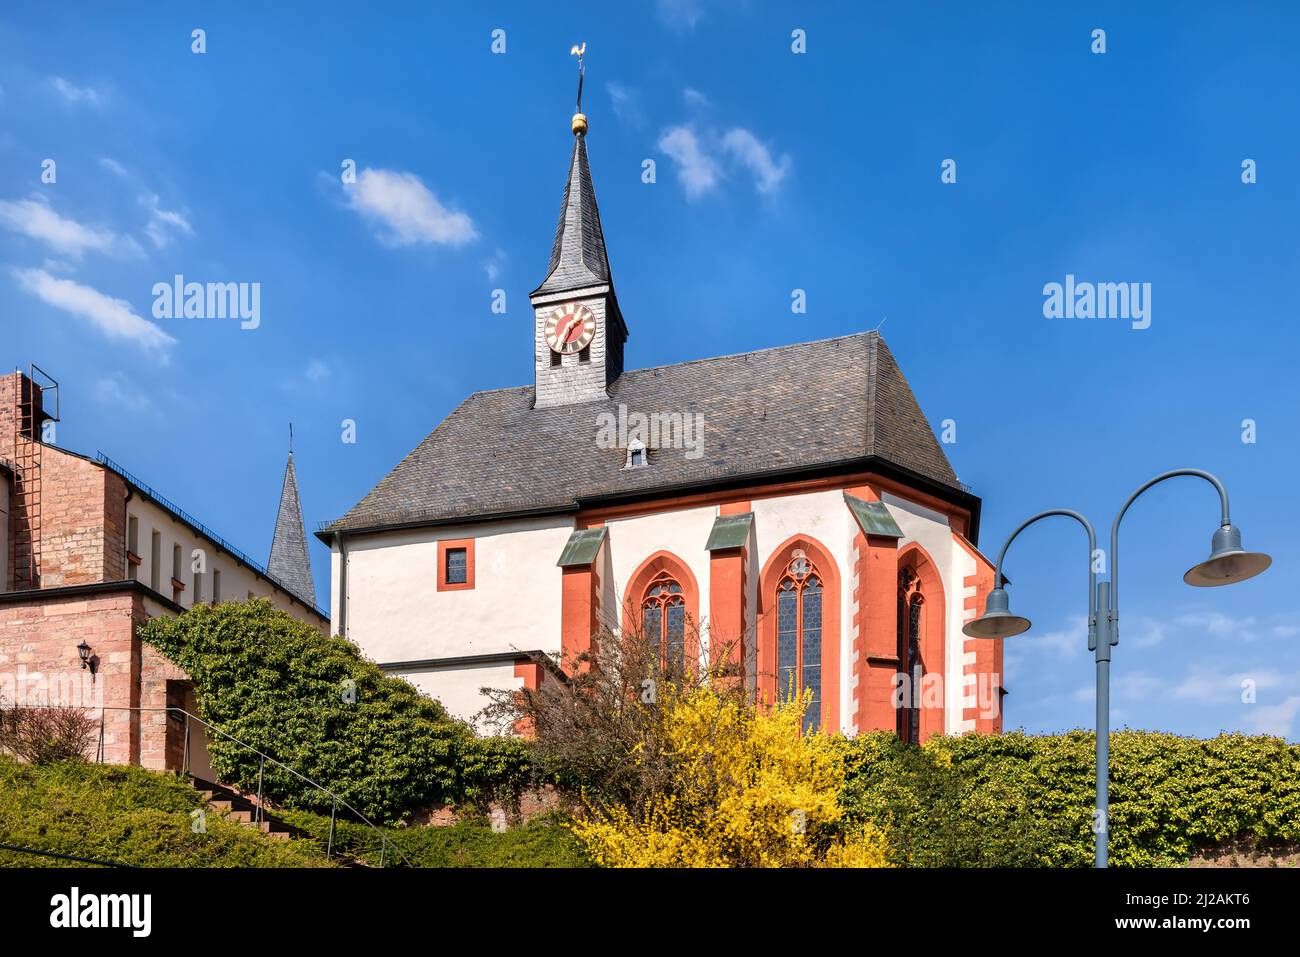 Pellegrinaggio chiesa Hessenthal-Mespelbrunn, Spessart, Germania. - Wallfahrtskirche Hessenthal Foto Stock